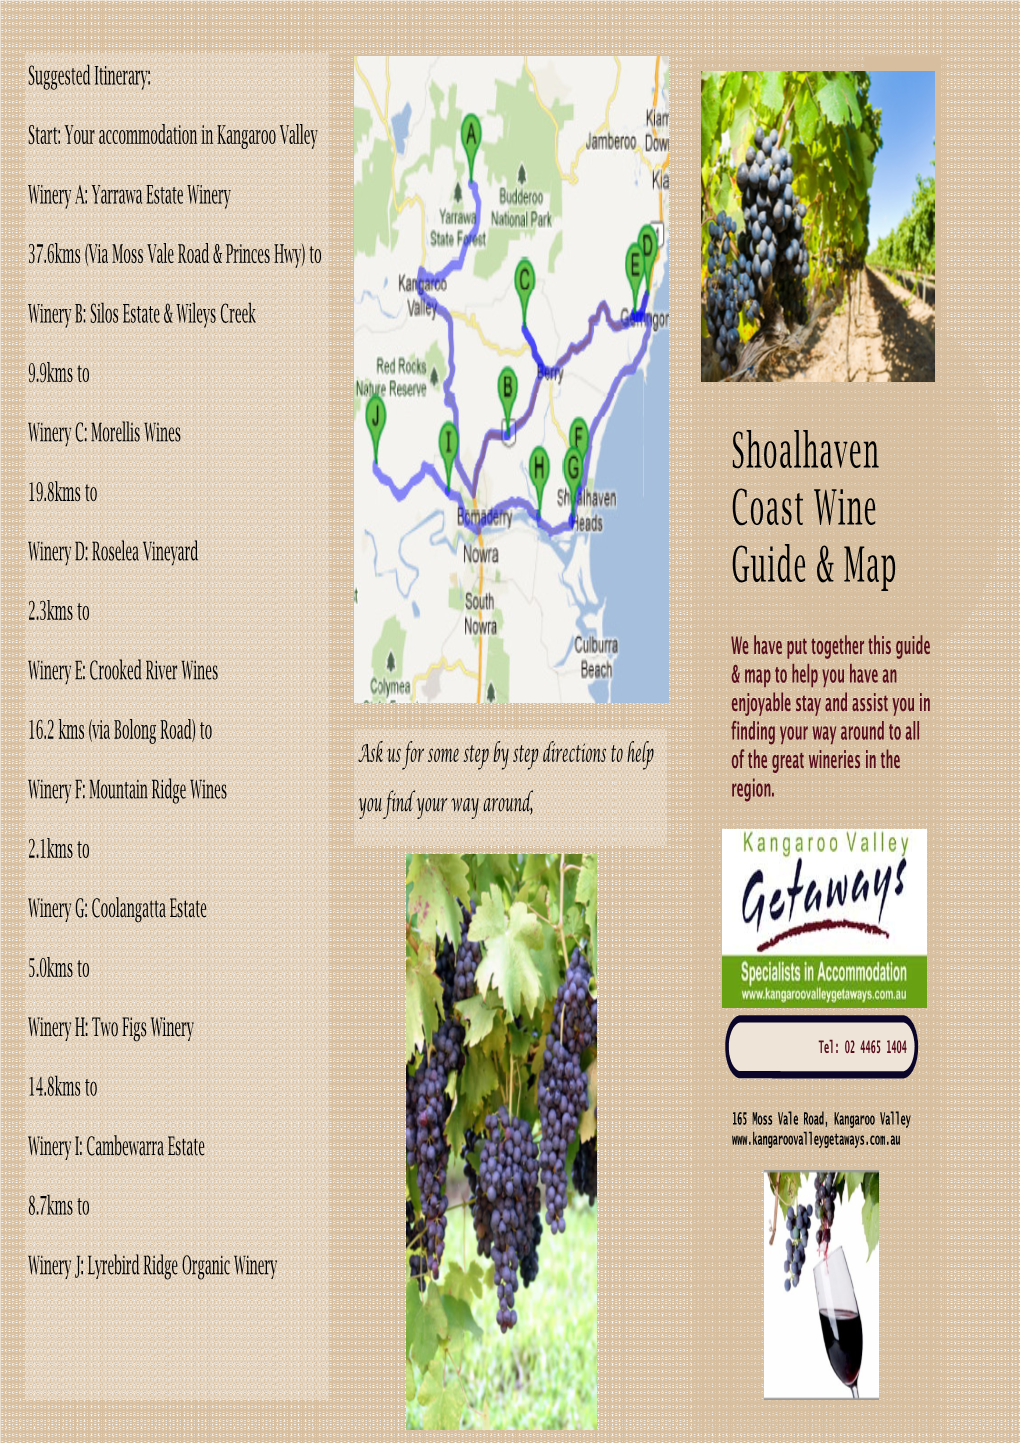 Shoalhaven Coast Wine Guide &